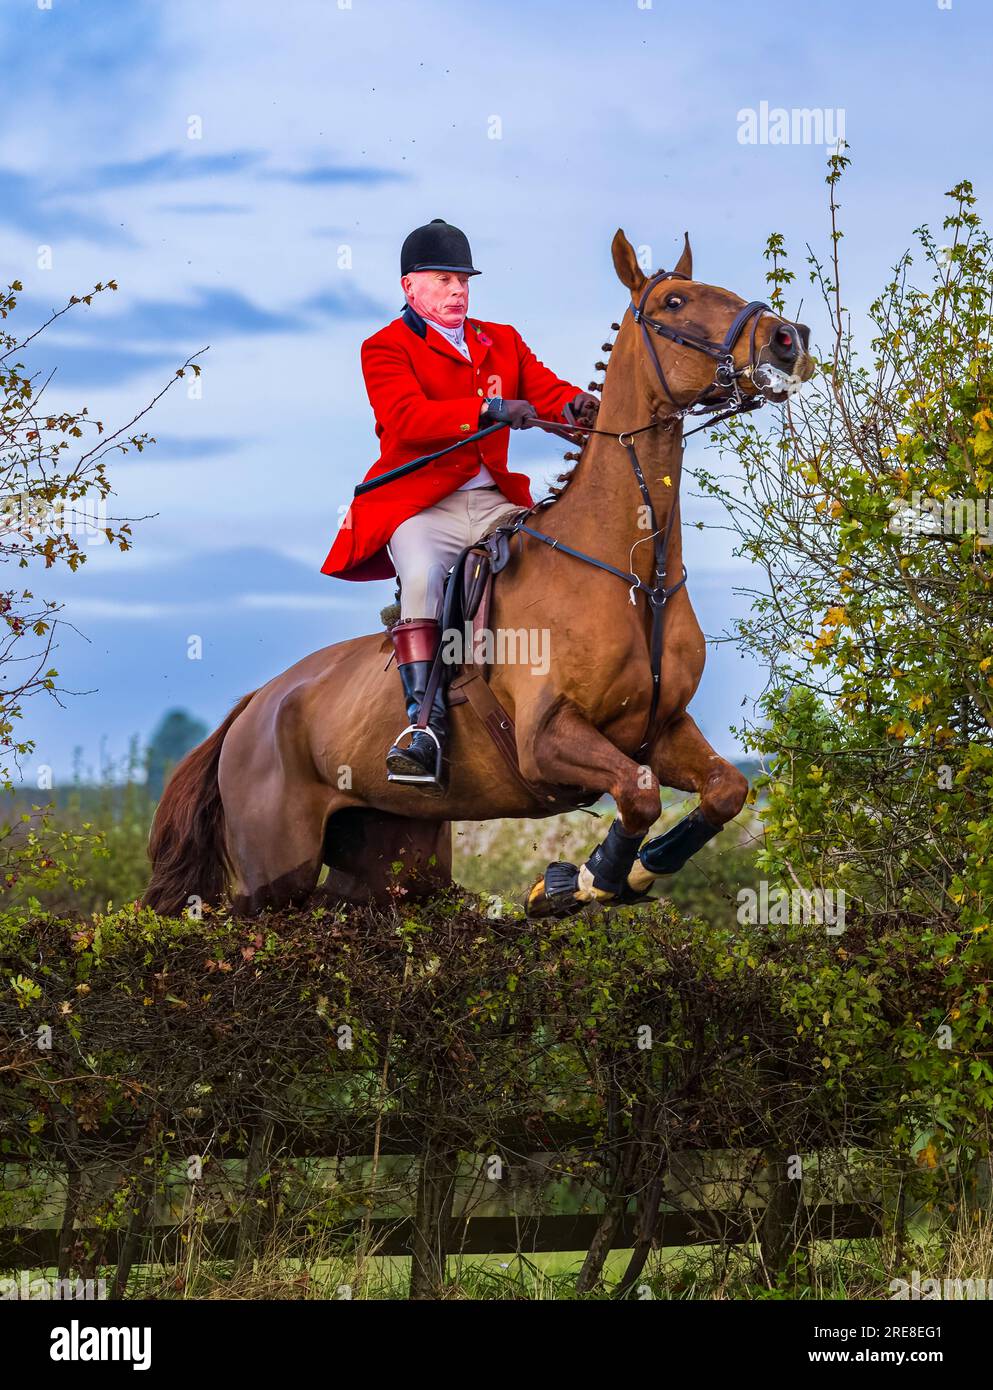 55 fotos de stock e banco de imagens de Horse Jumping Hedge - Getty Images